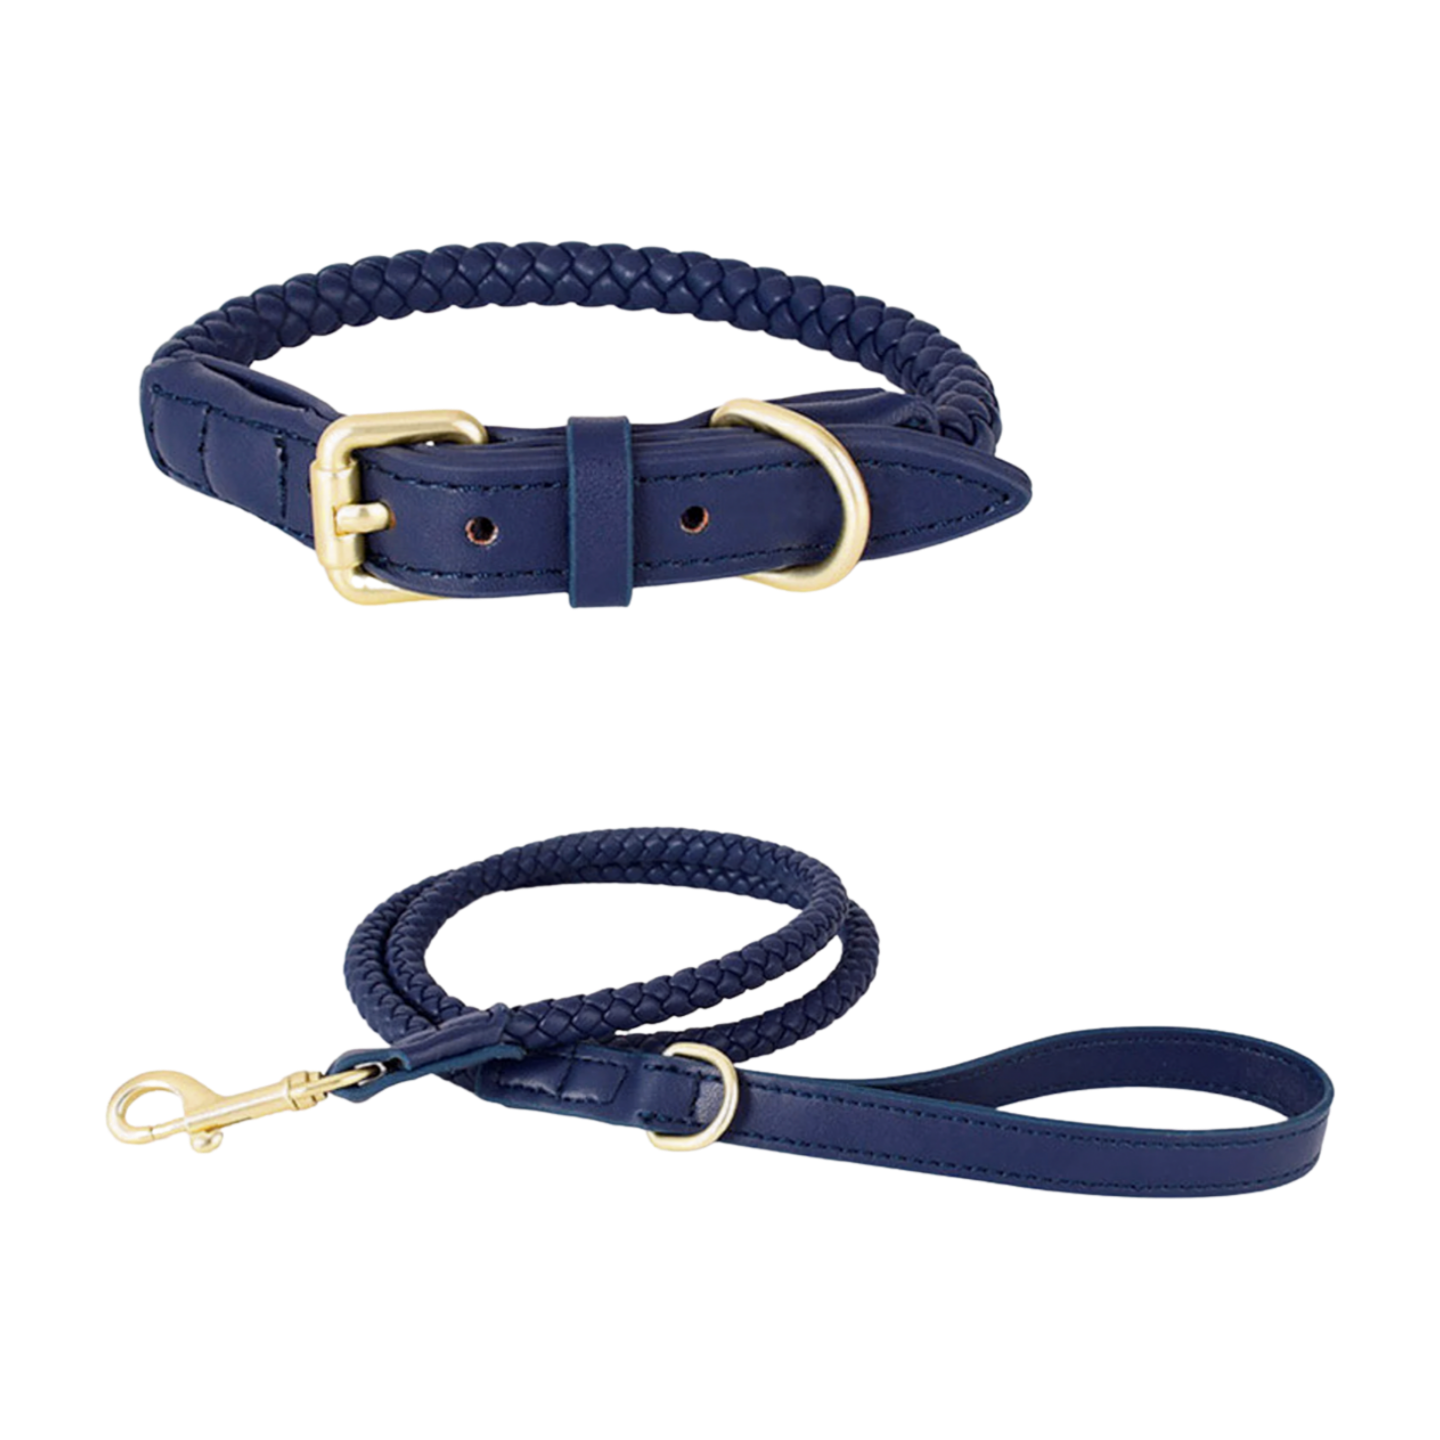 Leather Dog Leash And Collar Set manufacturer